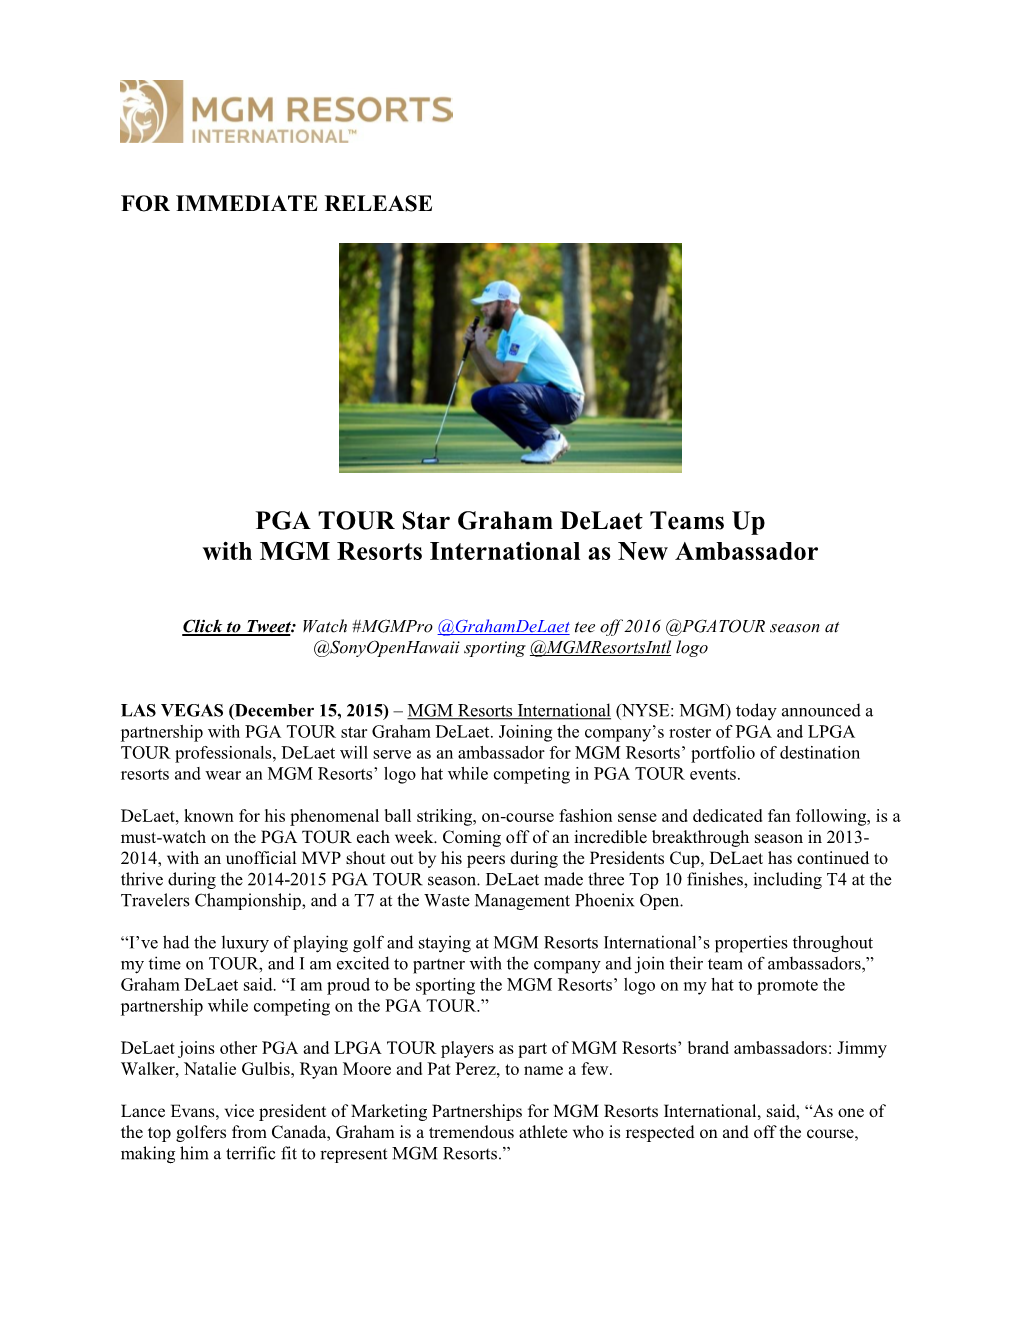 PGA TOUR Star Graham Delaet Teams up with MGM Resorts International As New Ambassador